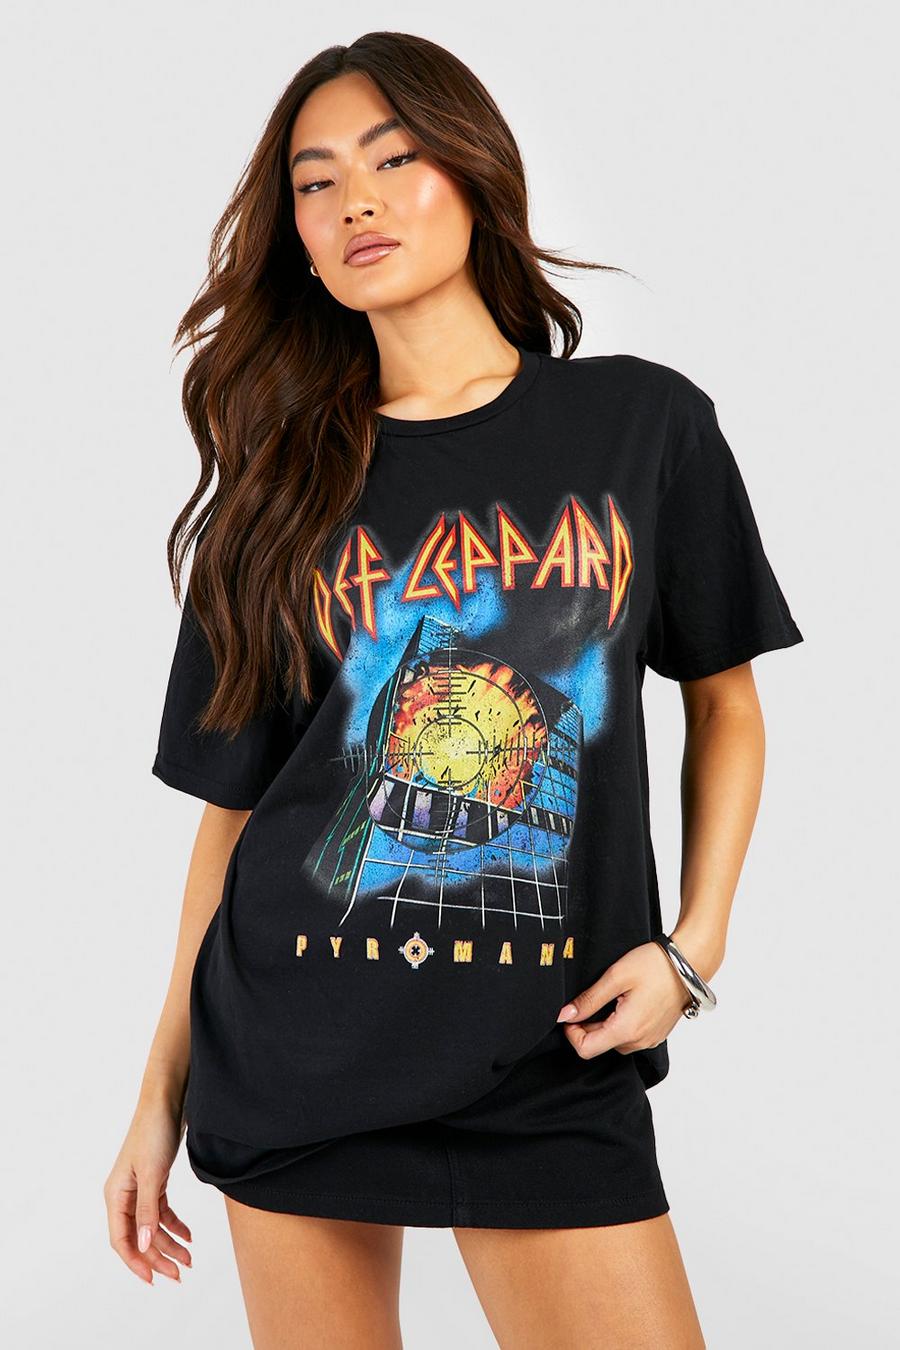 Def Leppard Band T-Shirt, Black